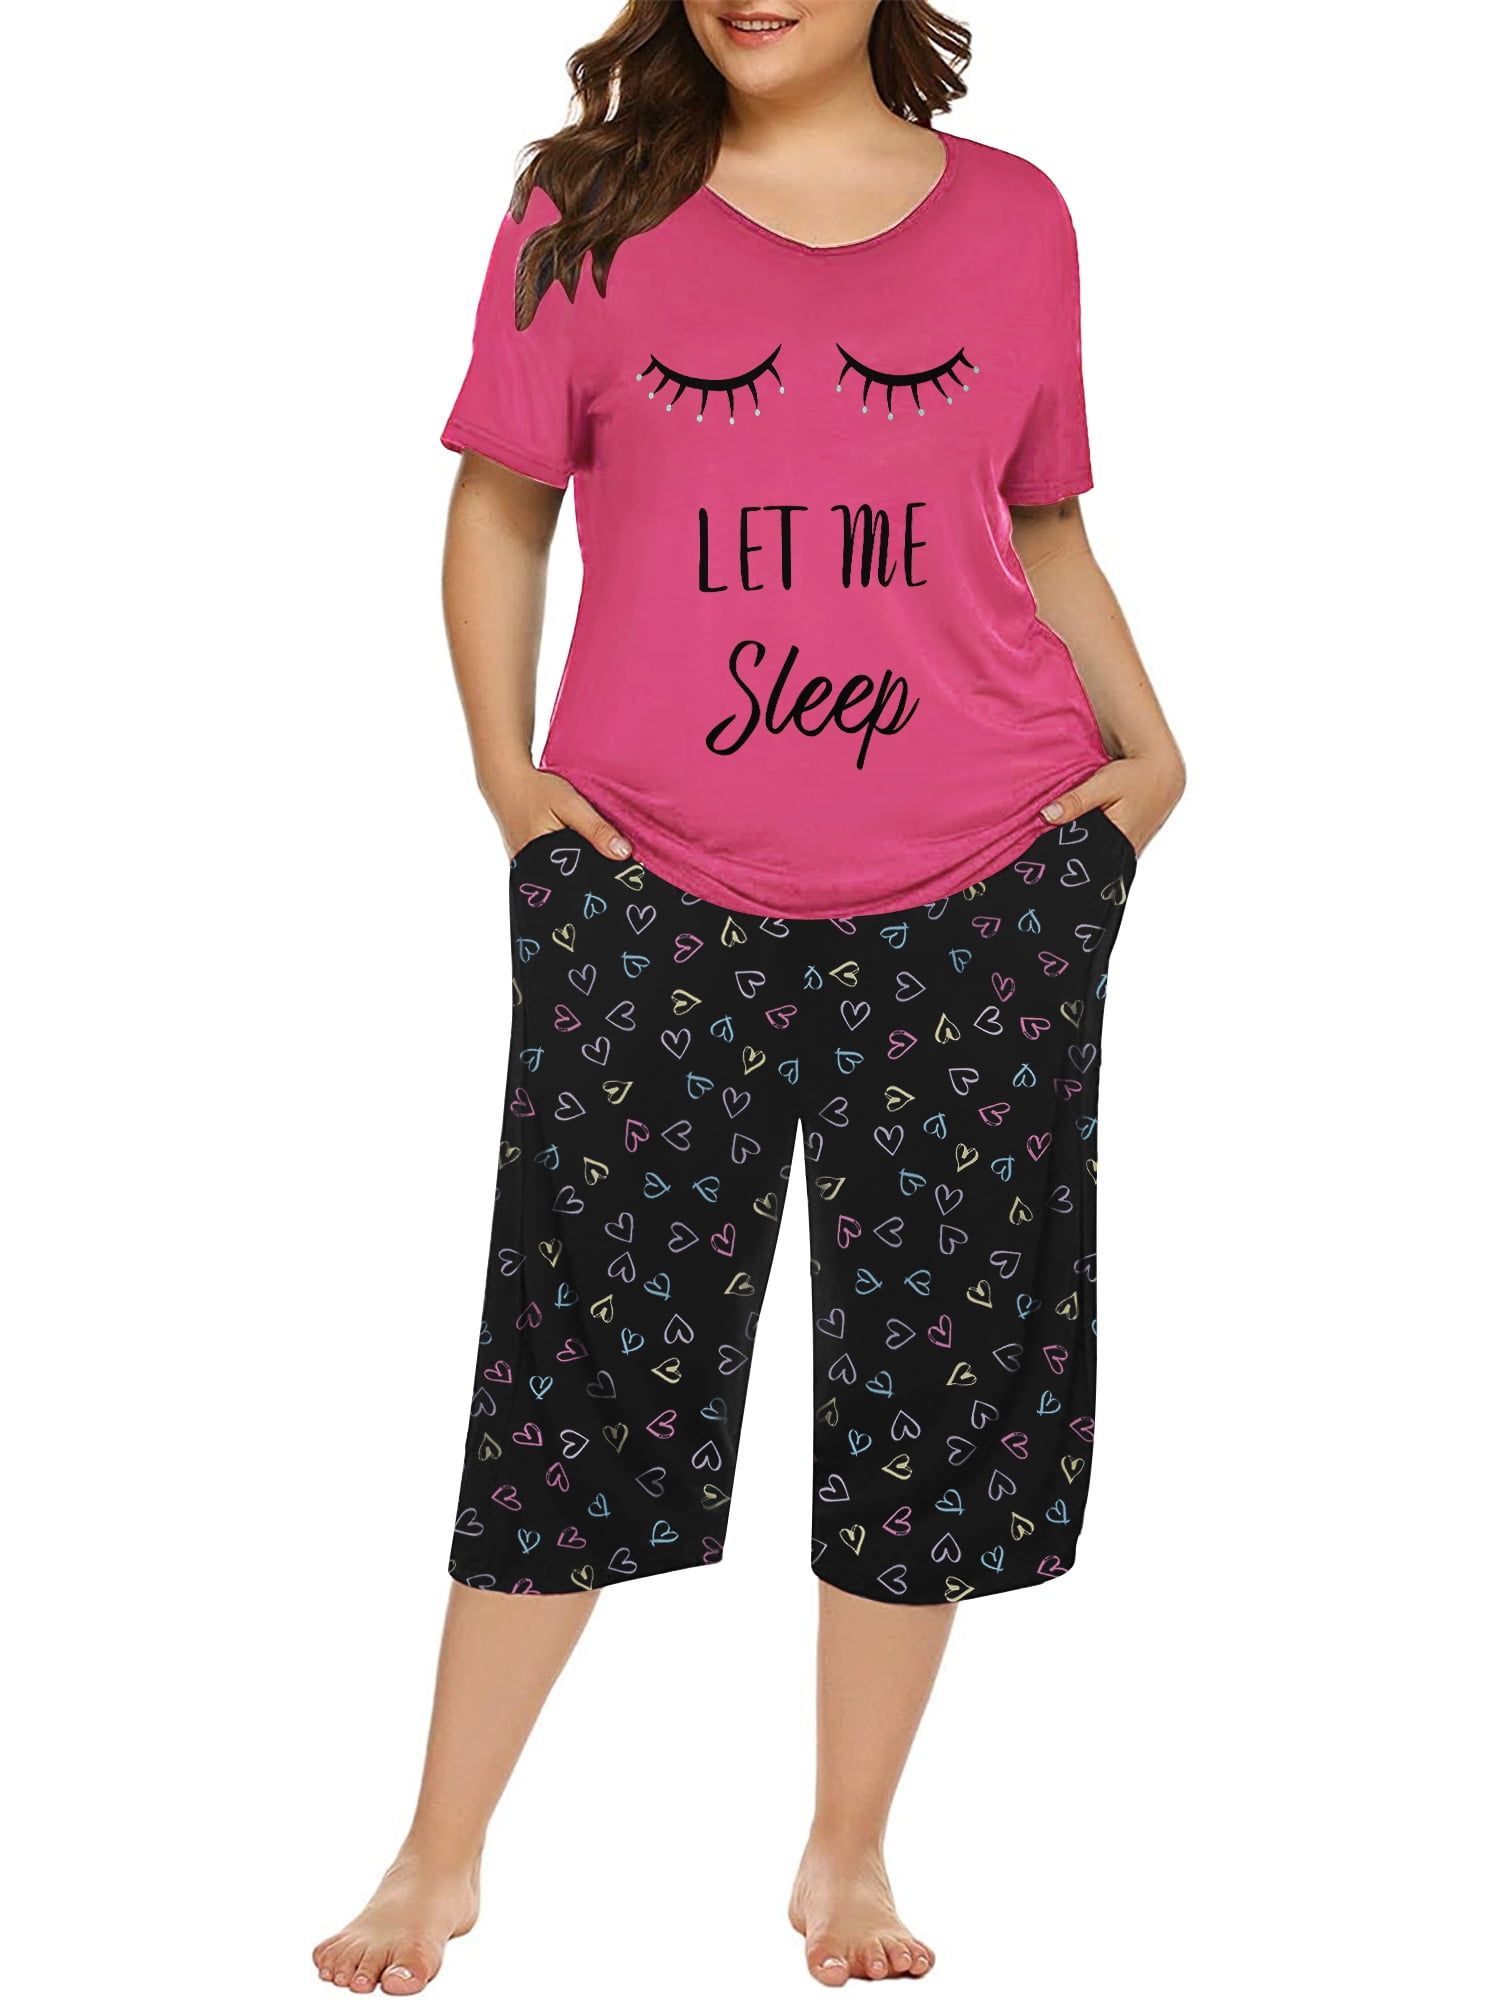 HONG HUI Womens Capri Pajama Sets Plus Size Sleepwear Top with Capri Pants 2 Piece Sleep Set 